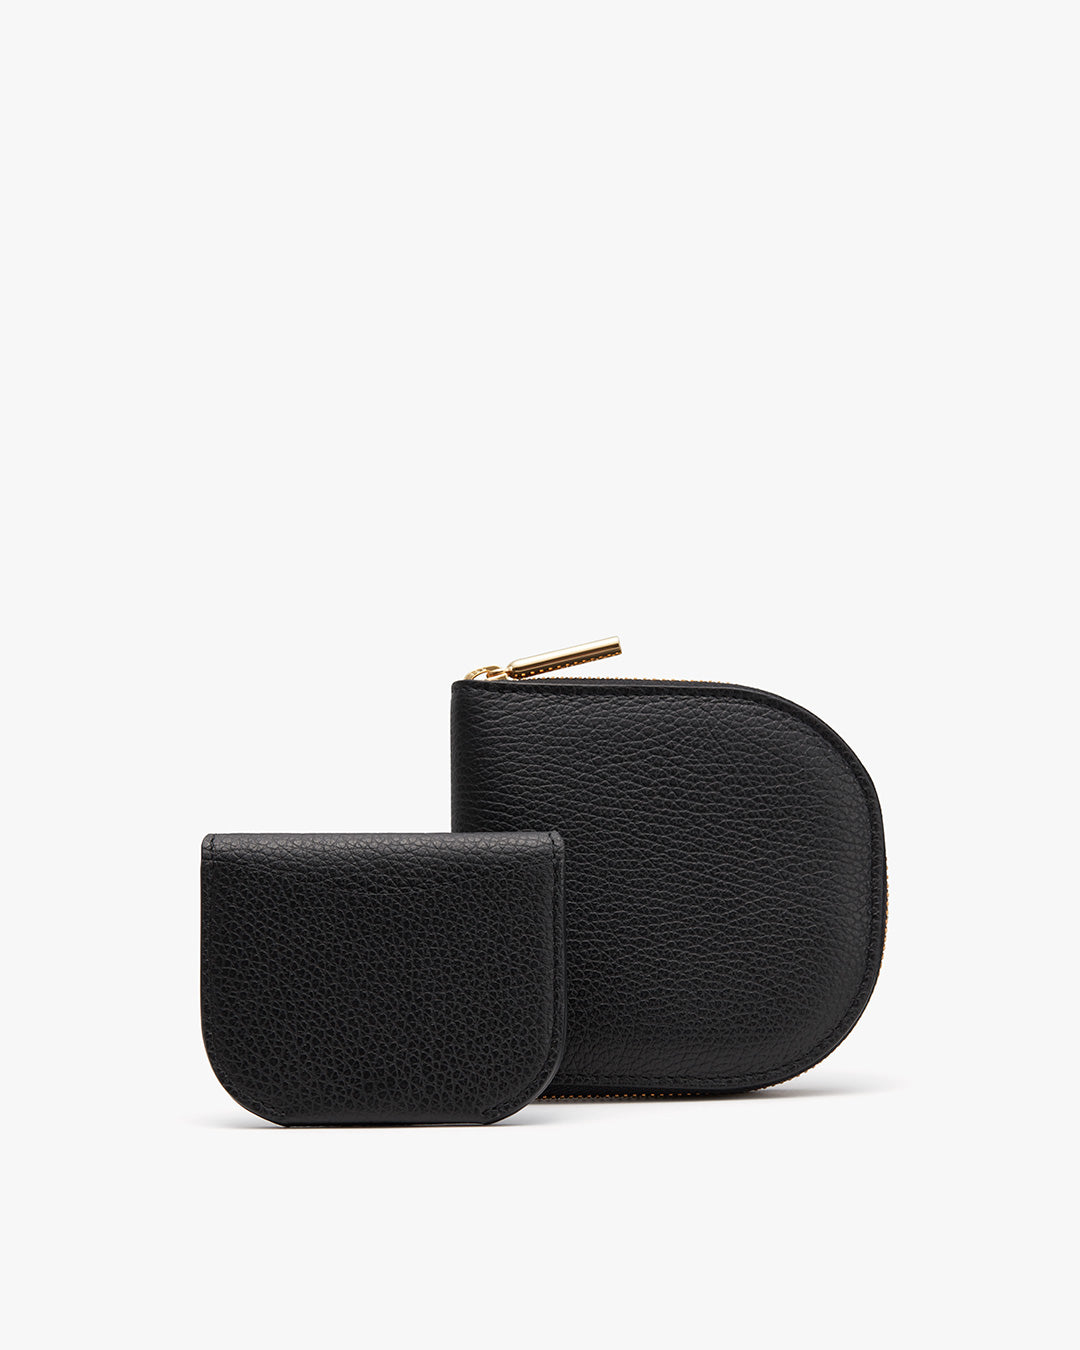 Small Black Wallet - Odette Compact Zipper Wallet